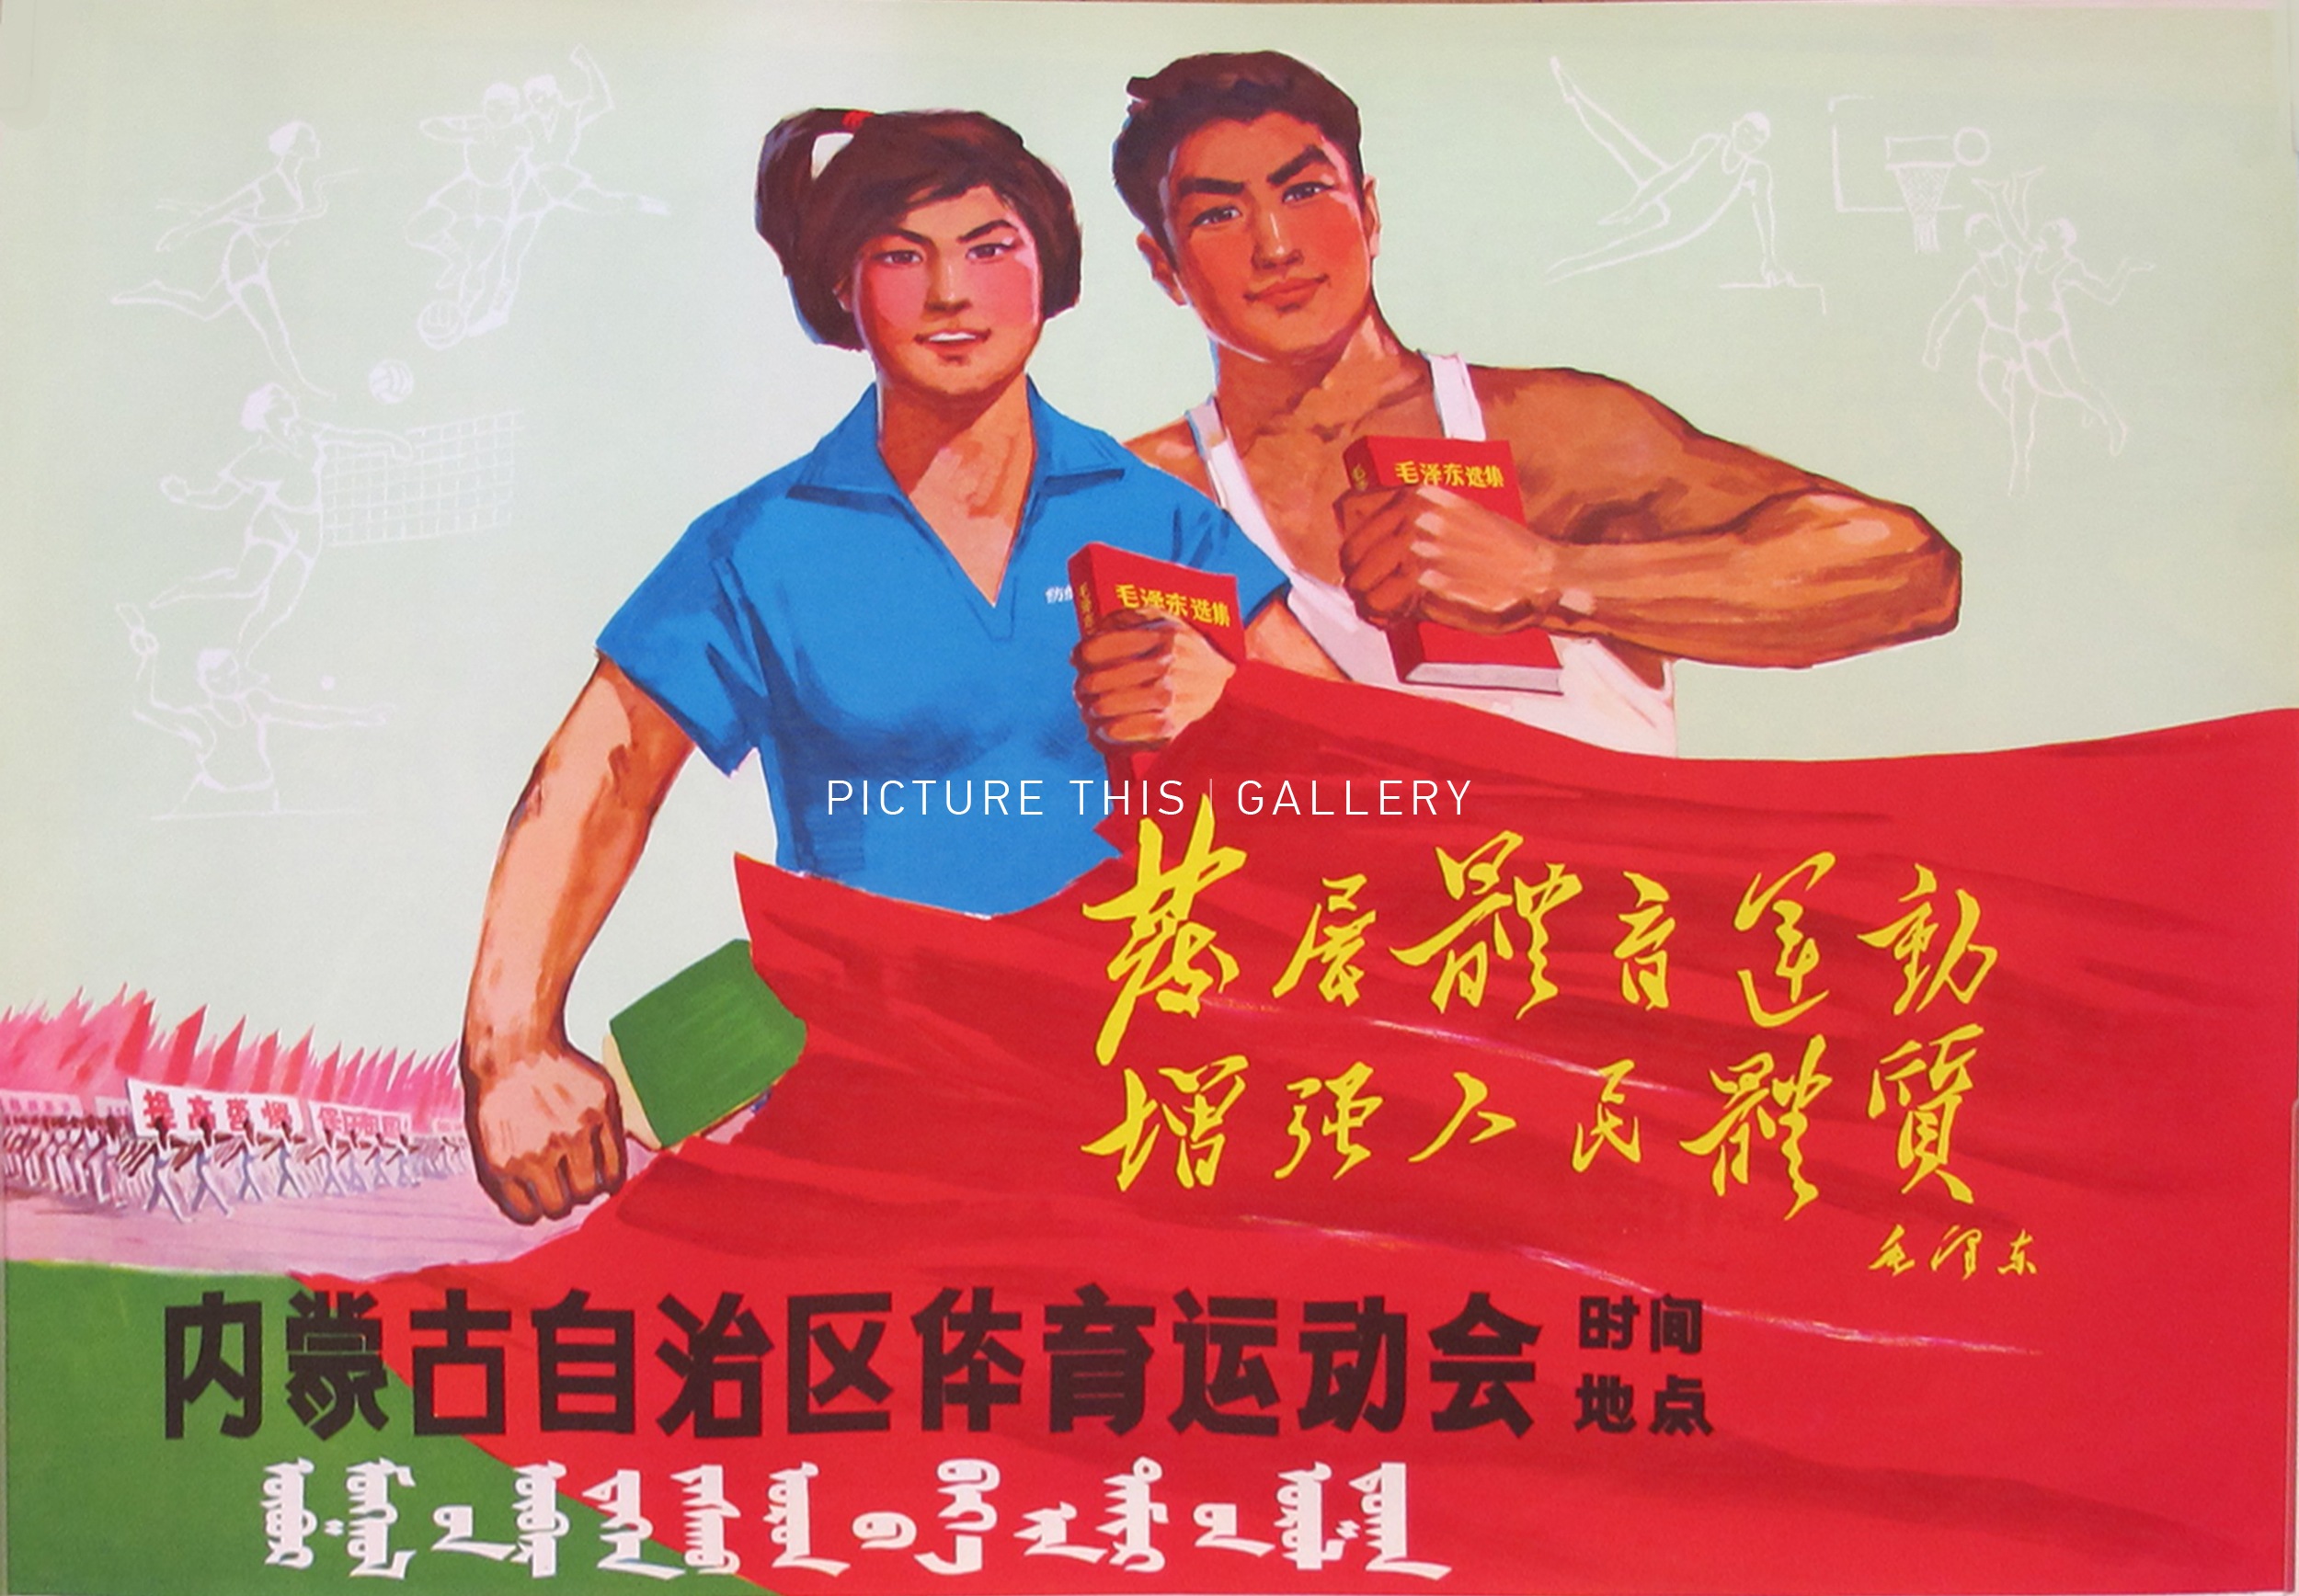 88 лозунг. Китайские плакаты времен Мао Цзэдуна. Китайский агитационный плакат эпохи Мао Цзэдуна. Азия для азиатов лозунг. Футболка с Мао Цзэдуном.